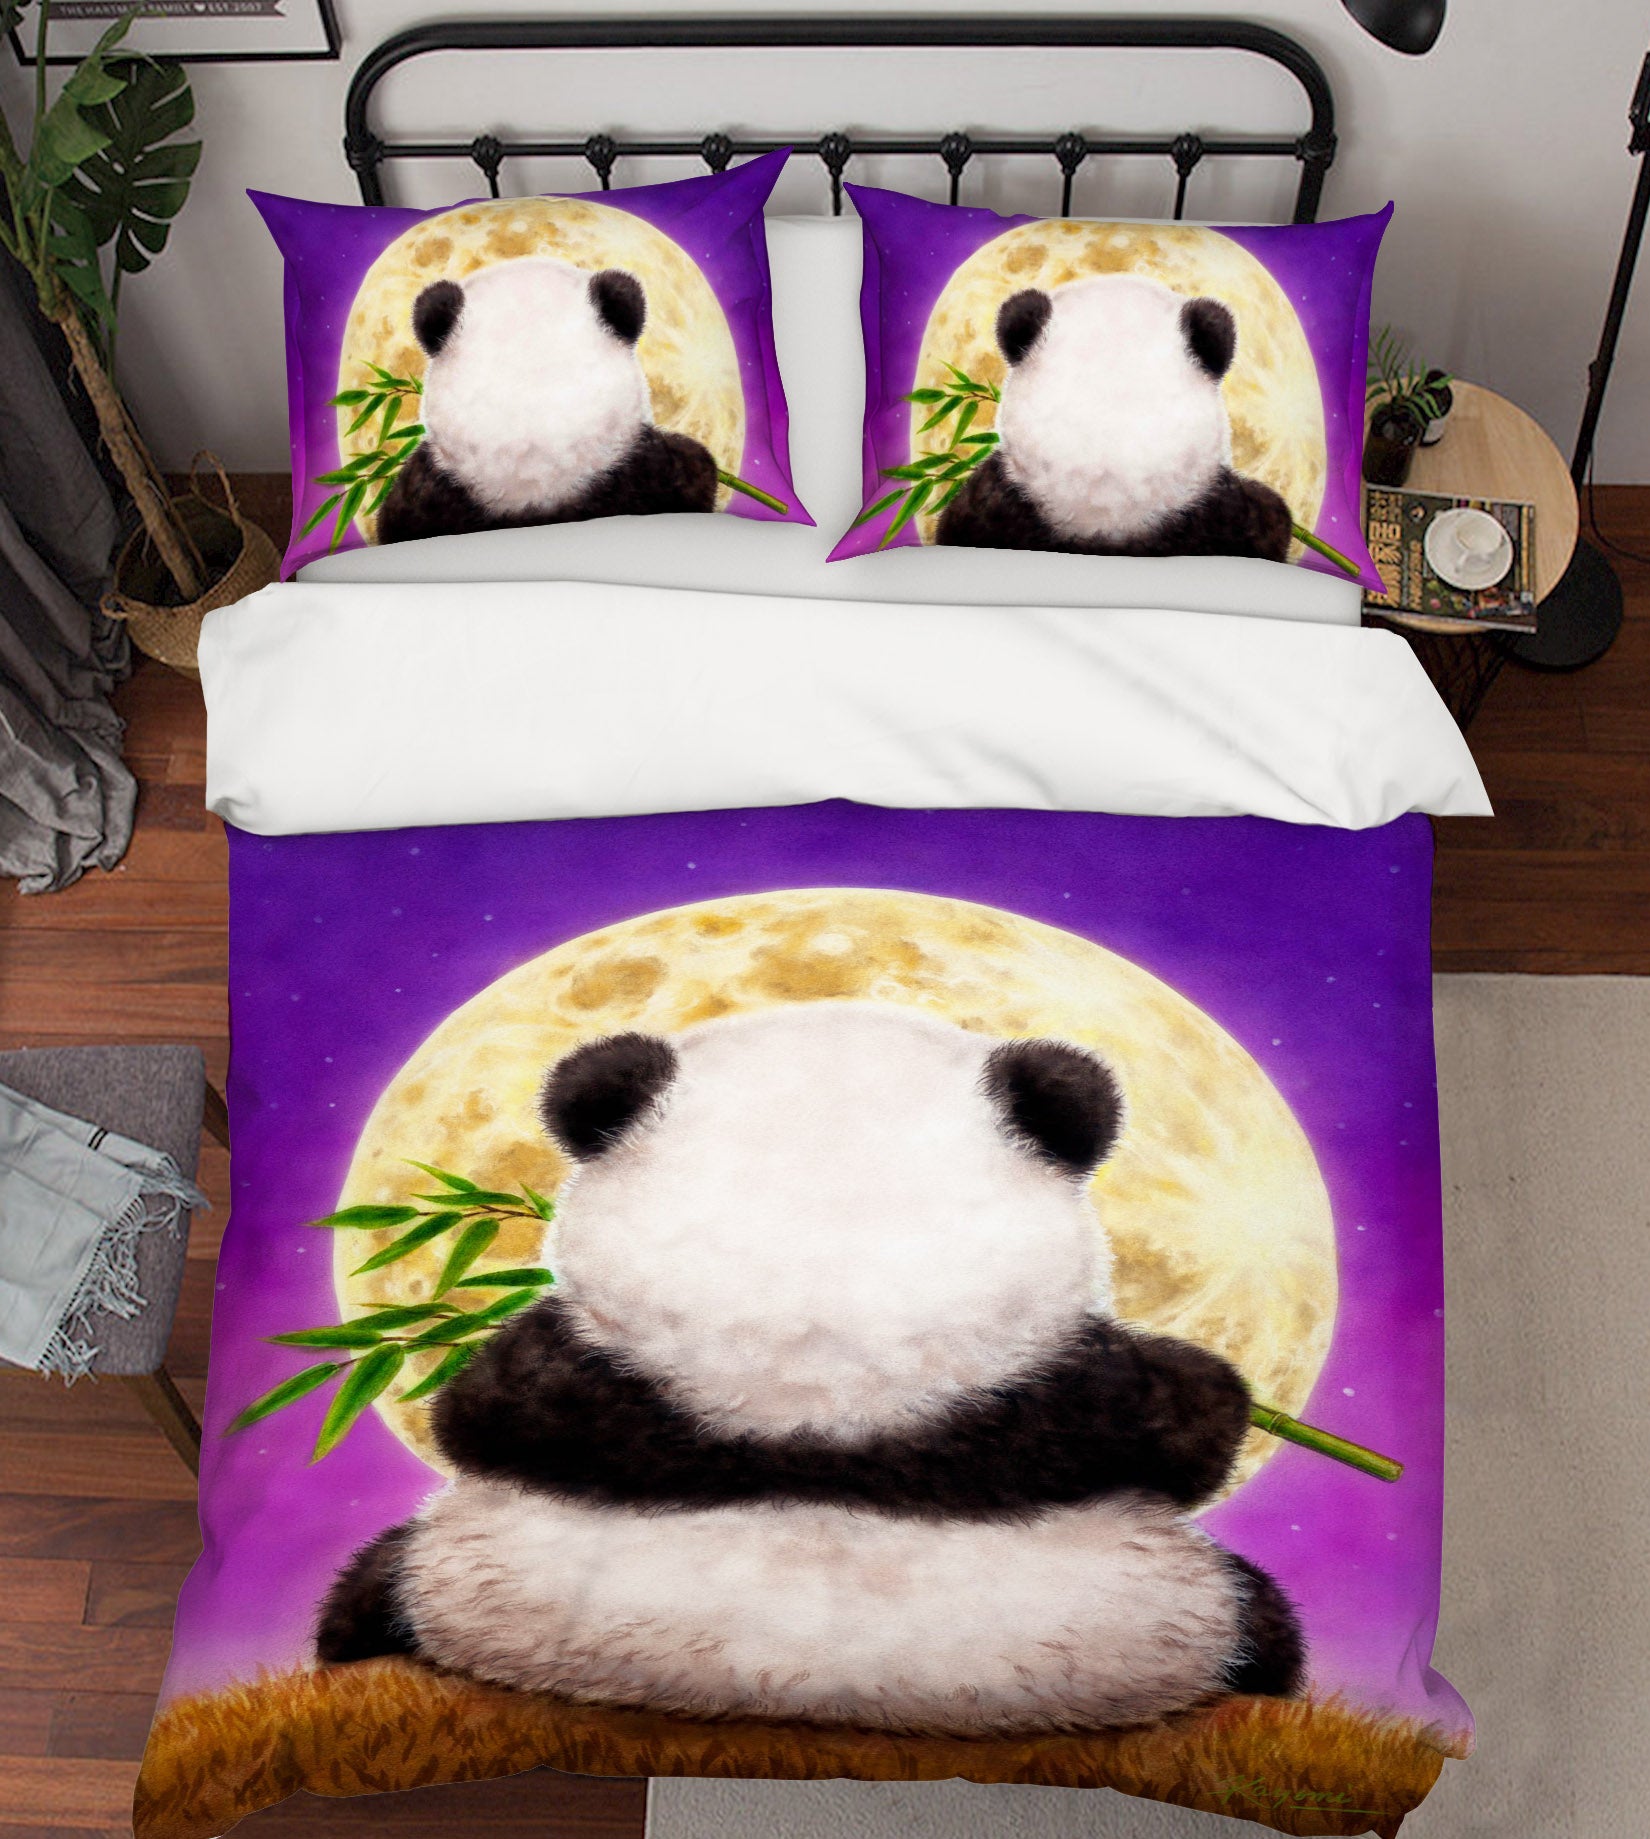 3D Panda Back View 5845 Kayomi Harai Bedding Bed Pillowcases Quilt Cover Duvet Cover